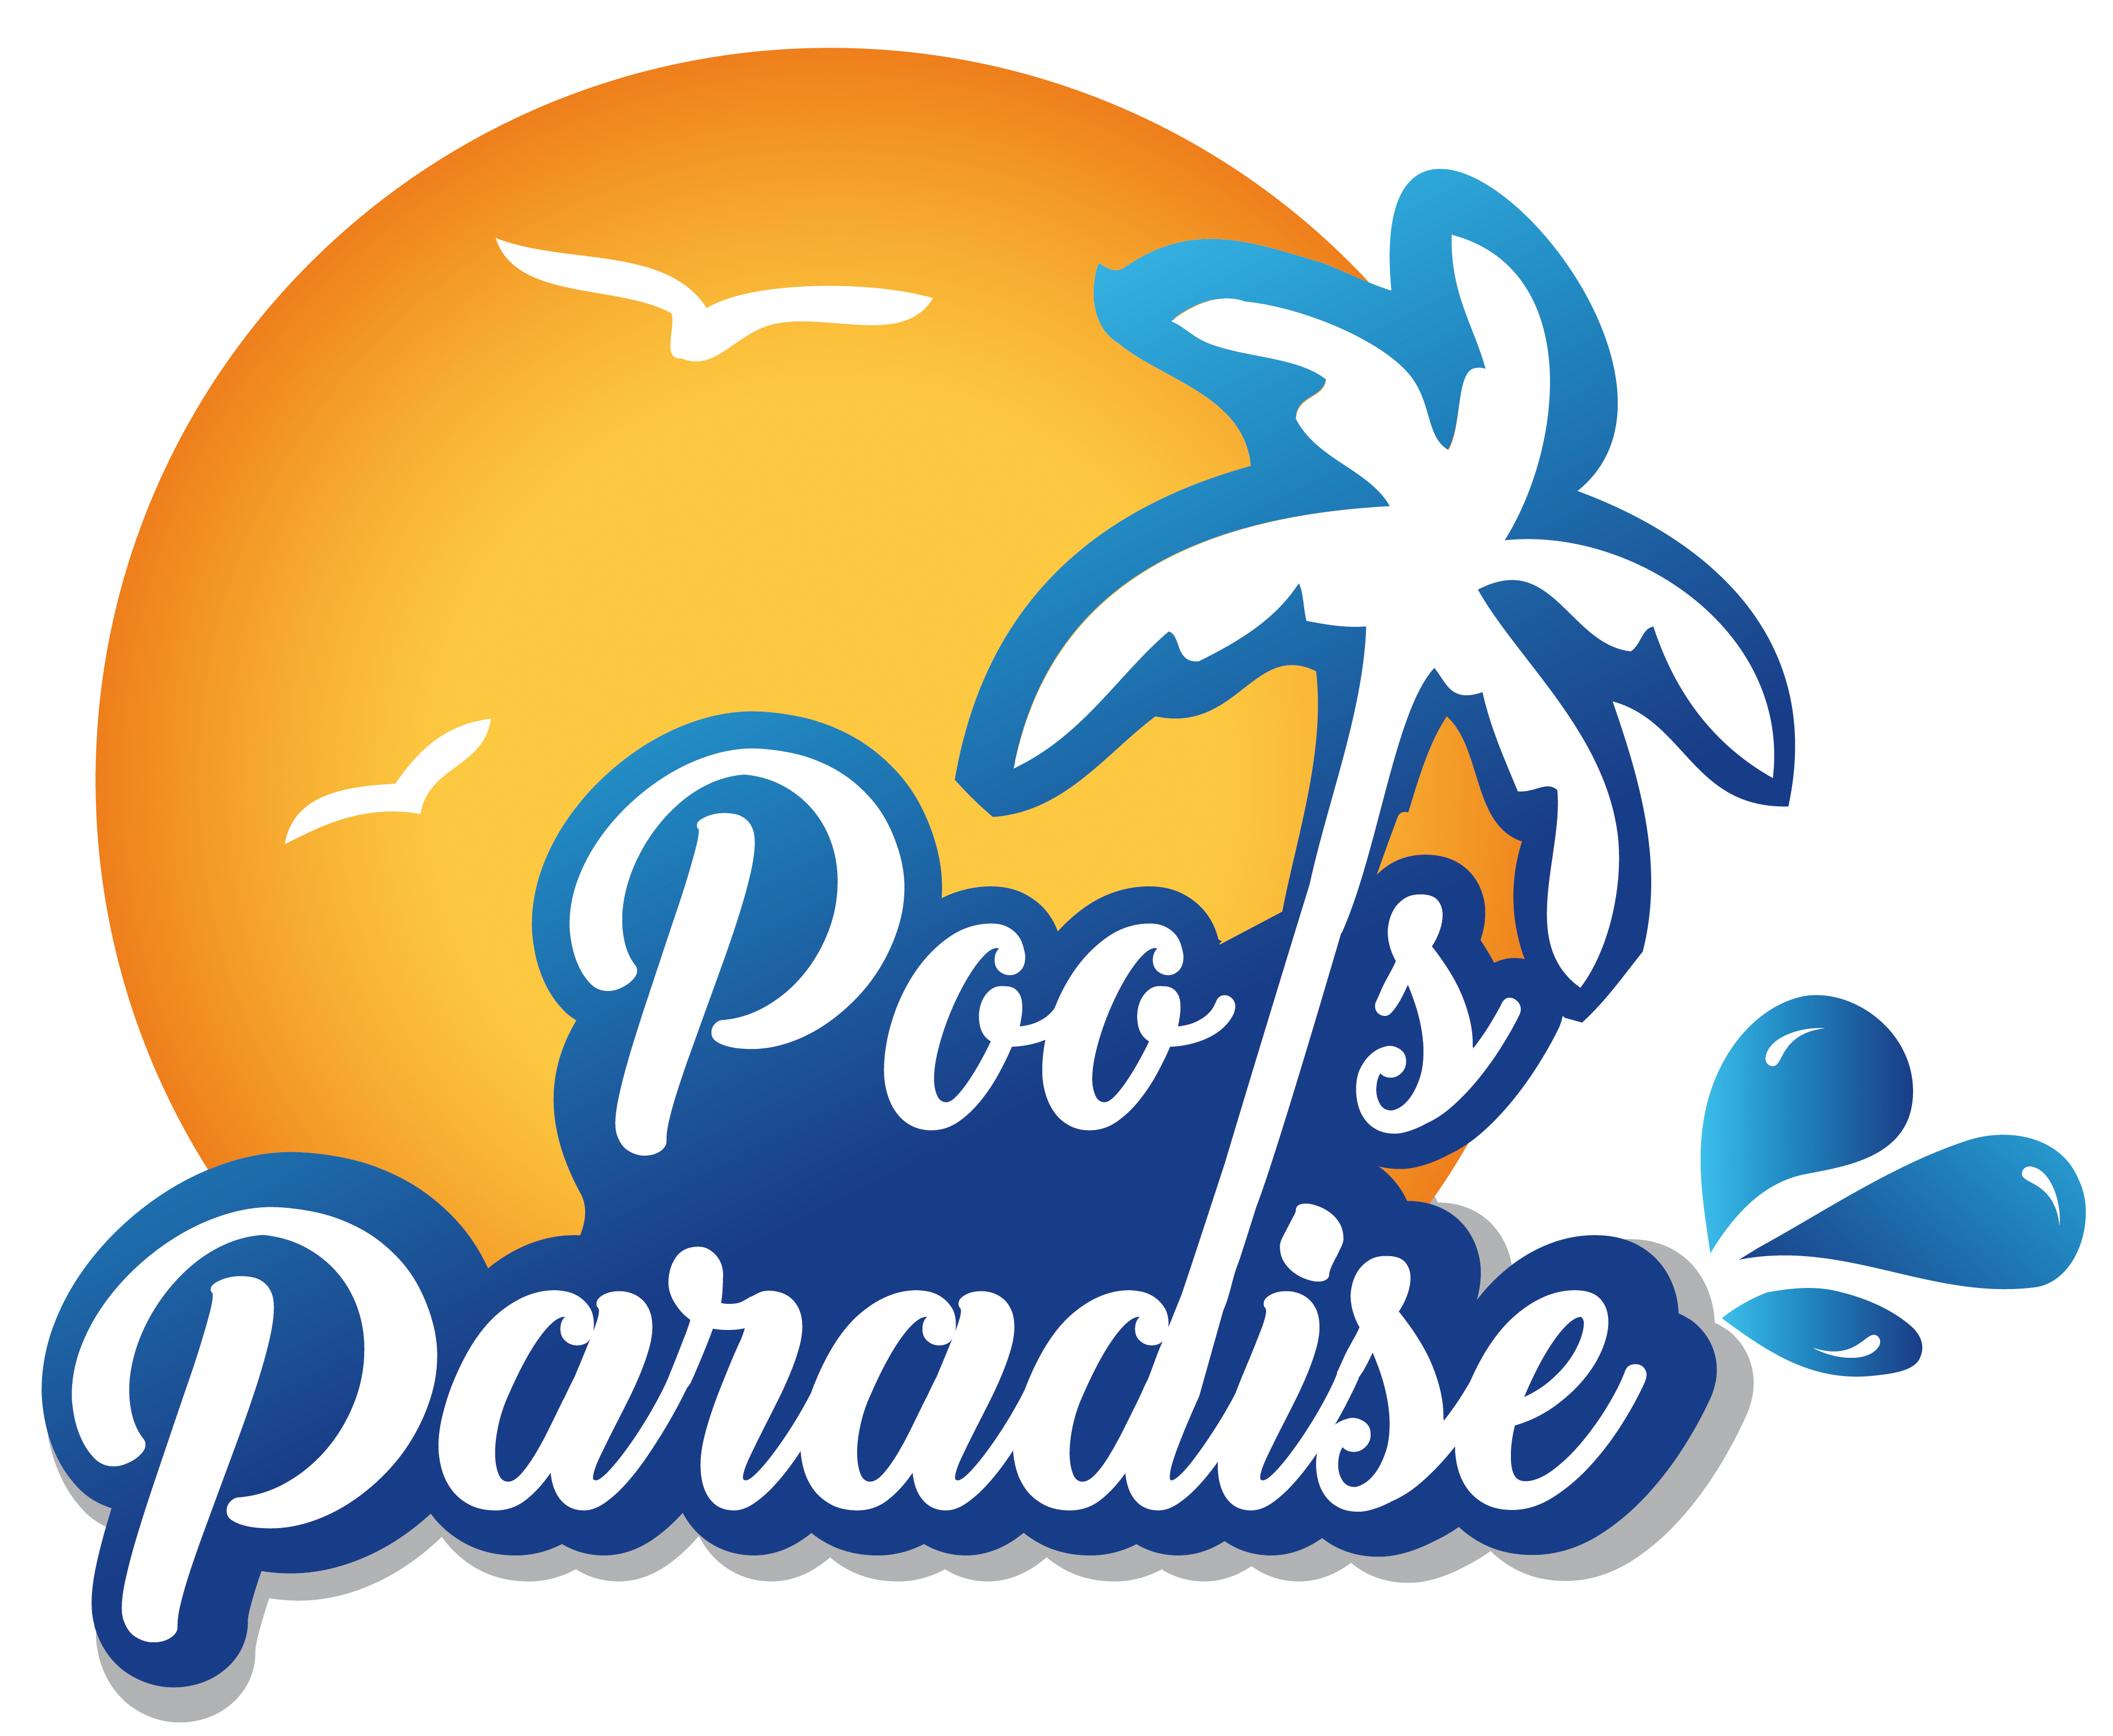 Pools Paradise